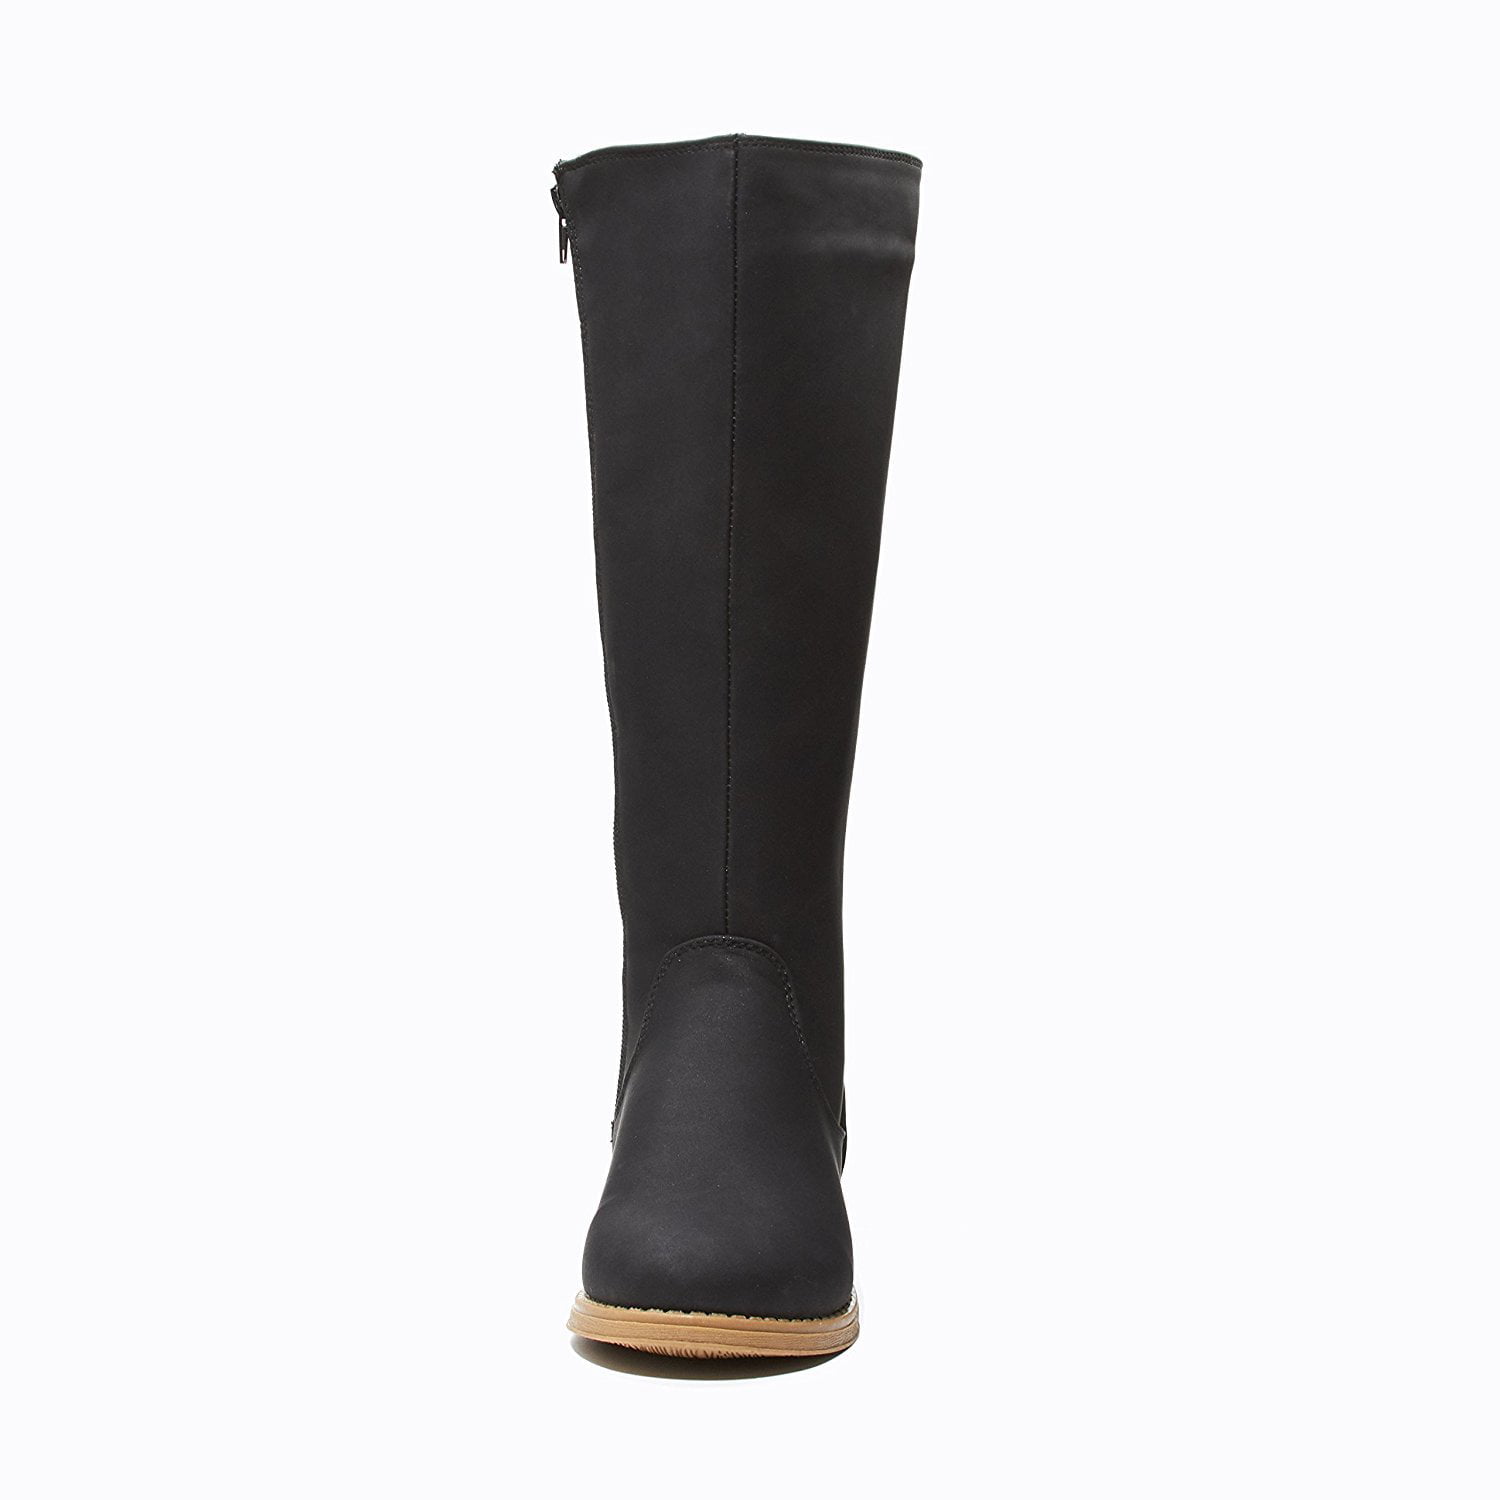 Details about    Women Outdoor Zip Up Tassels Block Heel Round Toe Knee High Boots Winter Warm D 